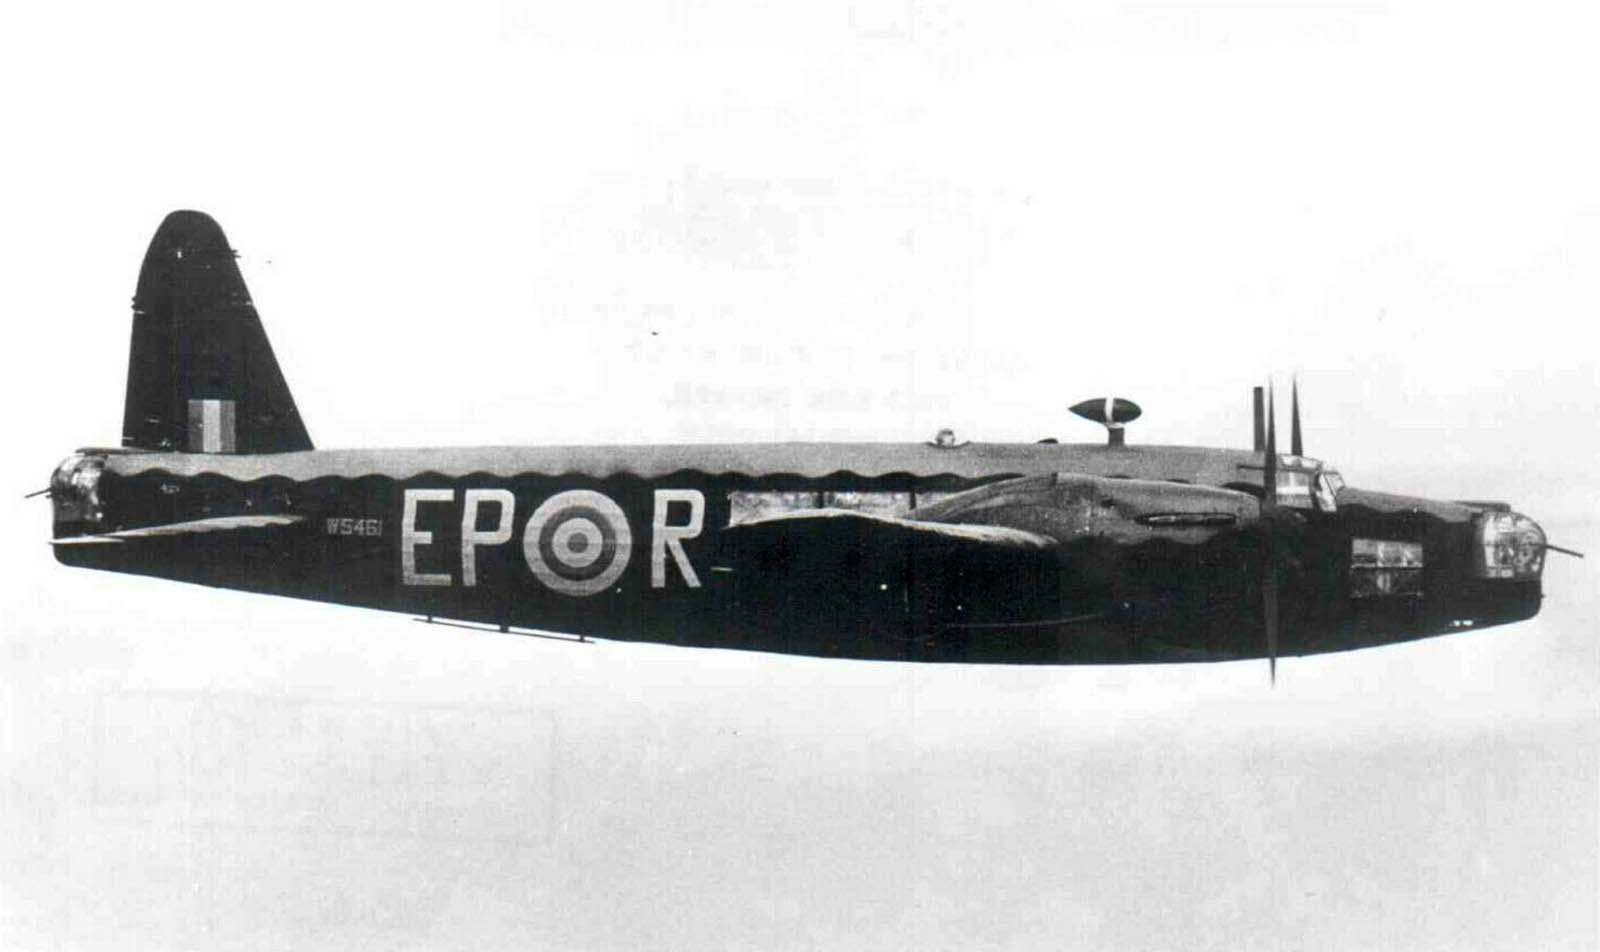 Vickers Wellington II RAF 104Sqn EPR W5461 inflight 1941 ebay 01